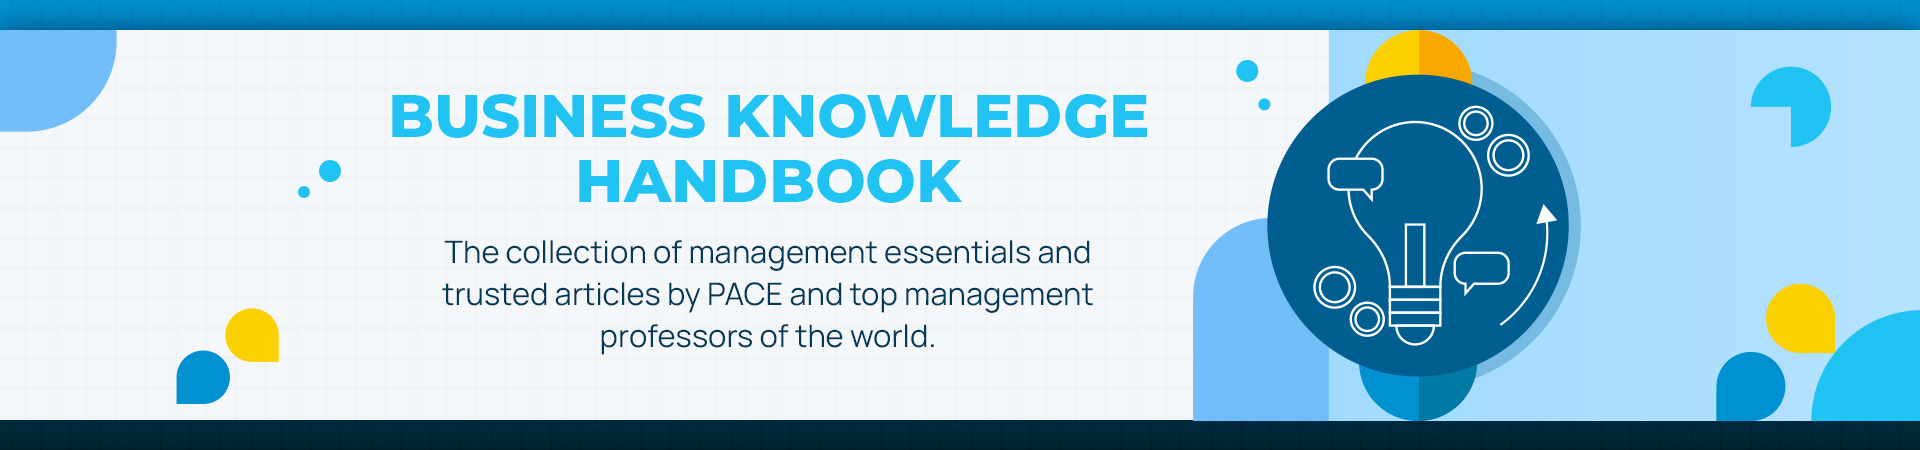 Business knowledge handbook